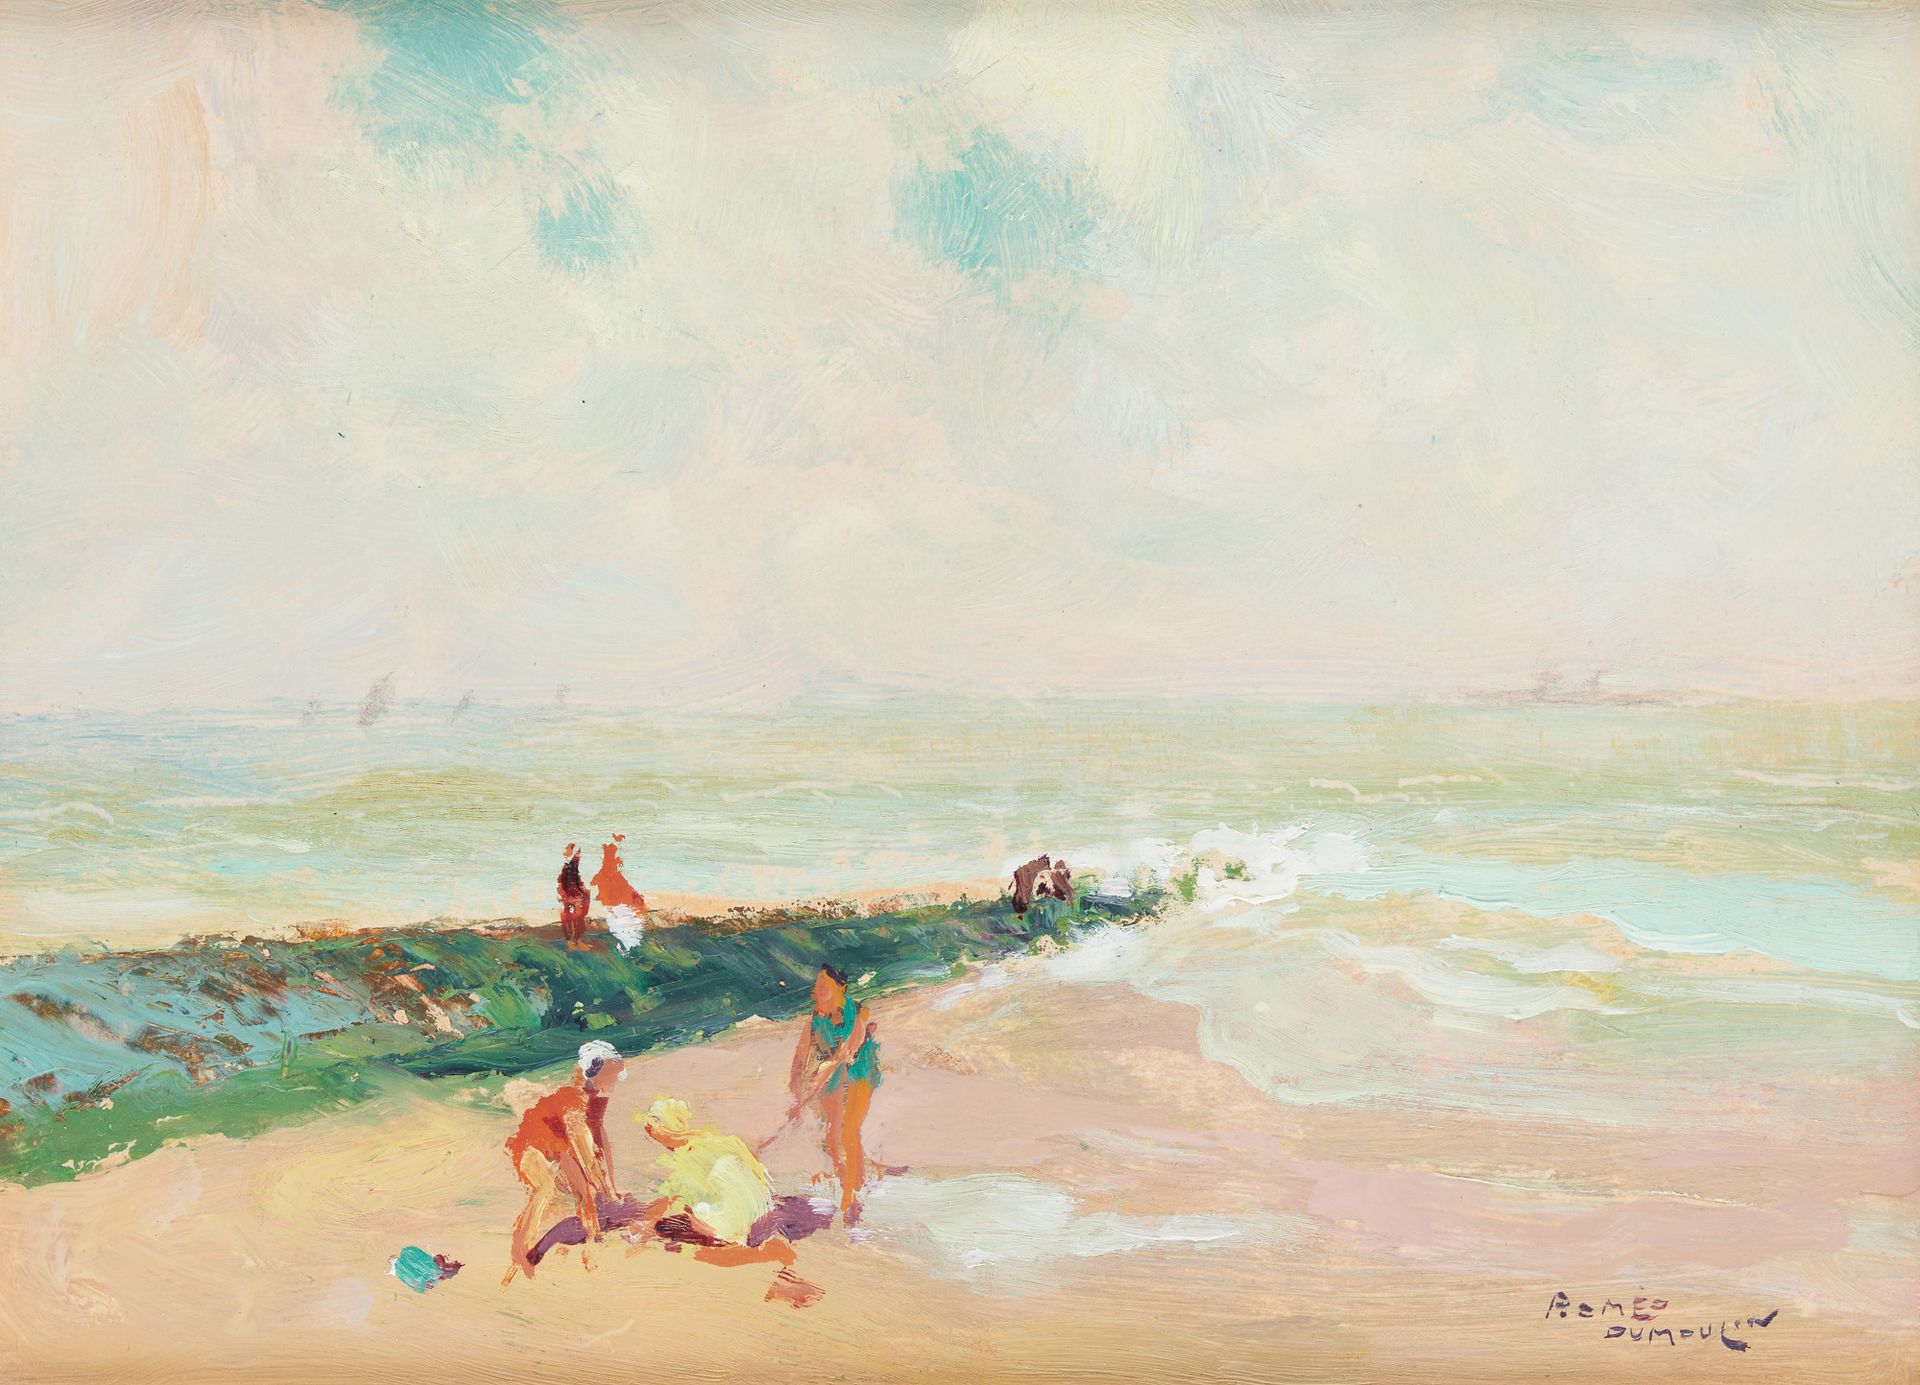 Romeo DUMOULIN École belge (1883-1944) Öl auf Leinwand: "La plage".

Signiert: R&hellip;